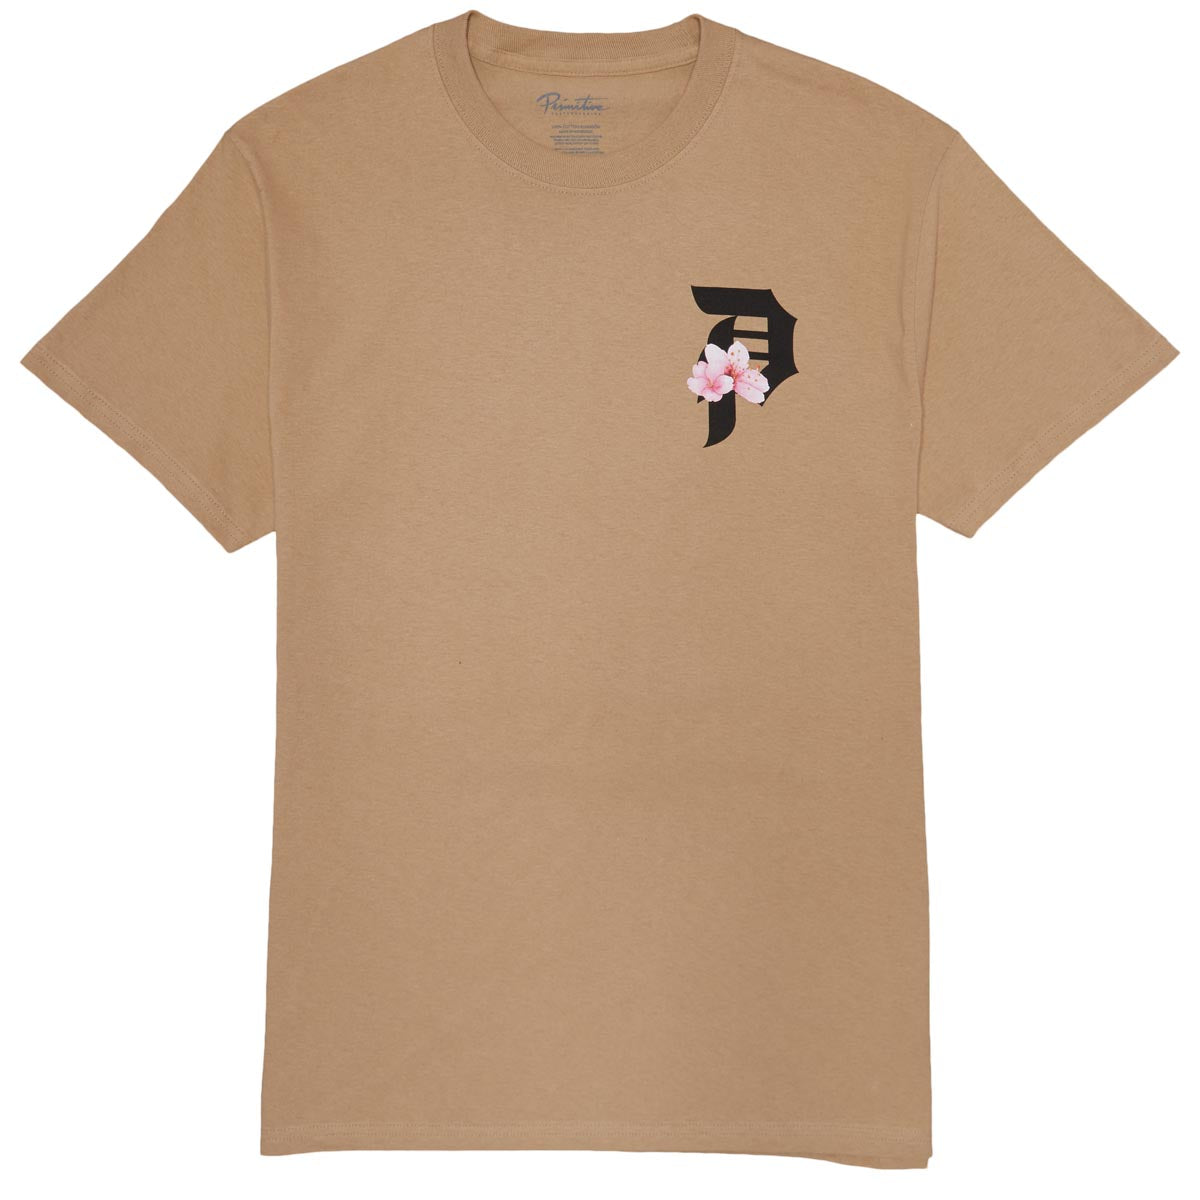 Primitive Sakura T-Shirt - Sand image 2